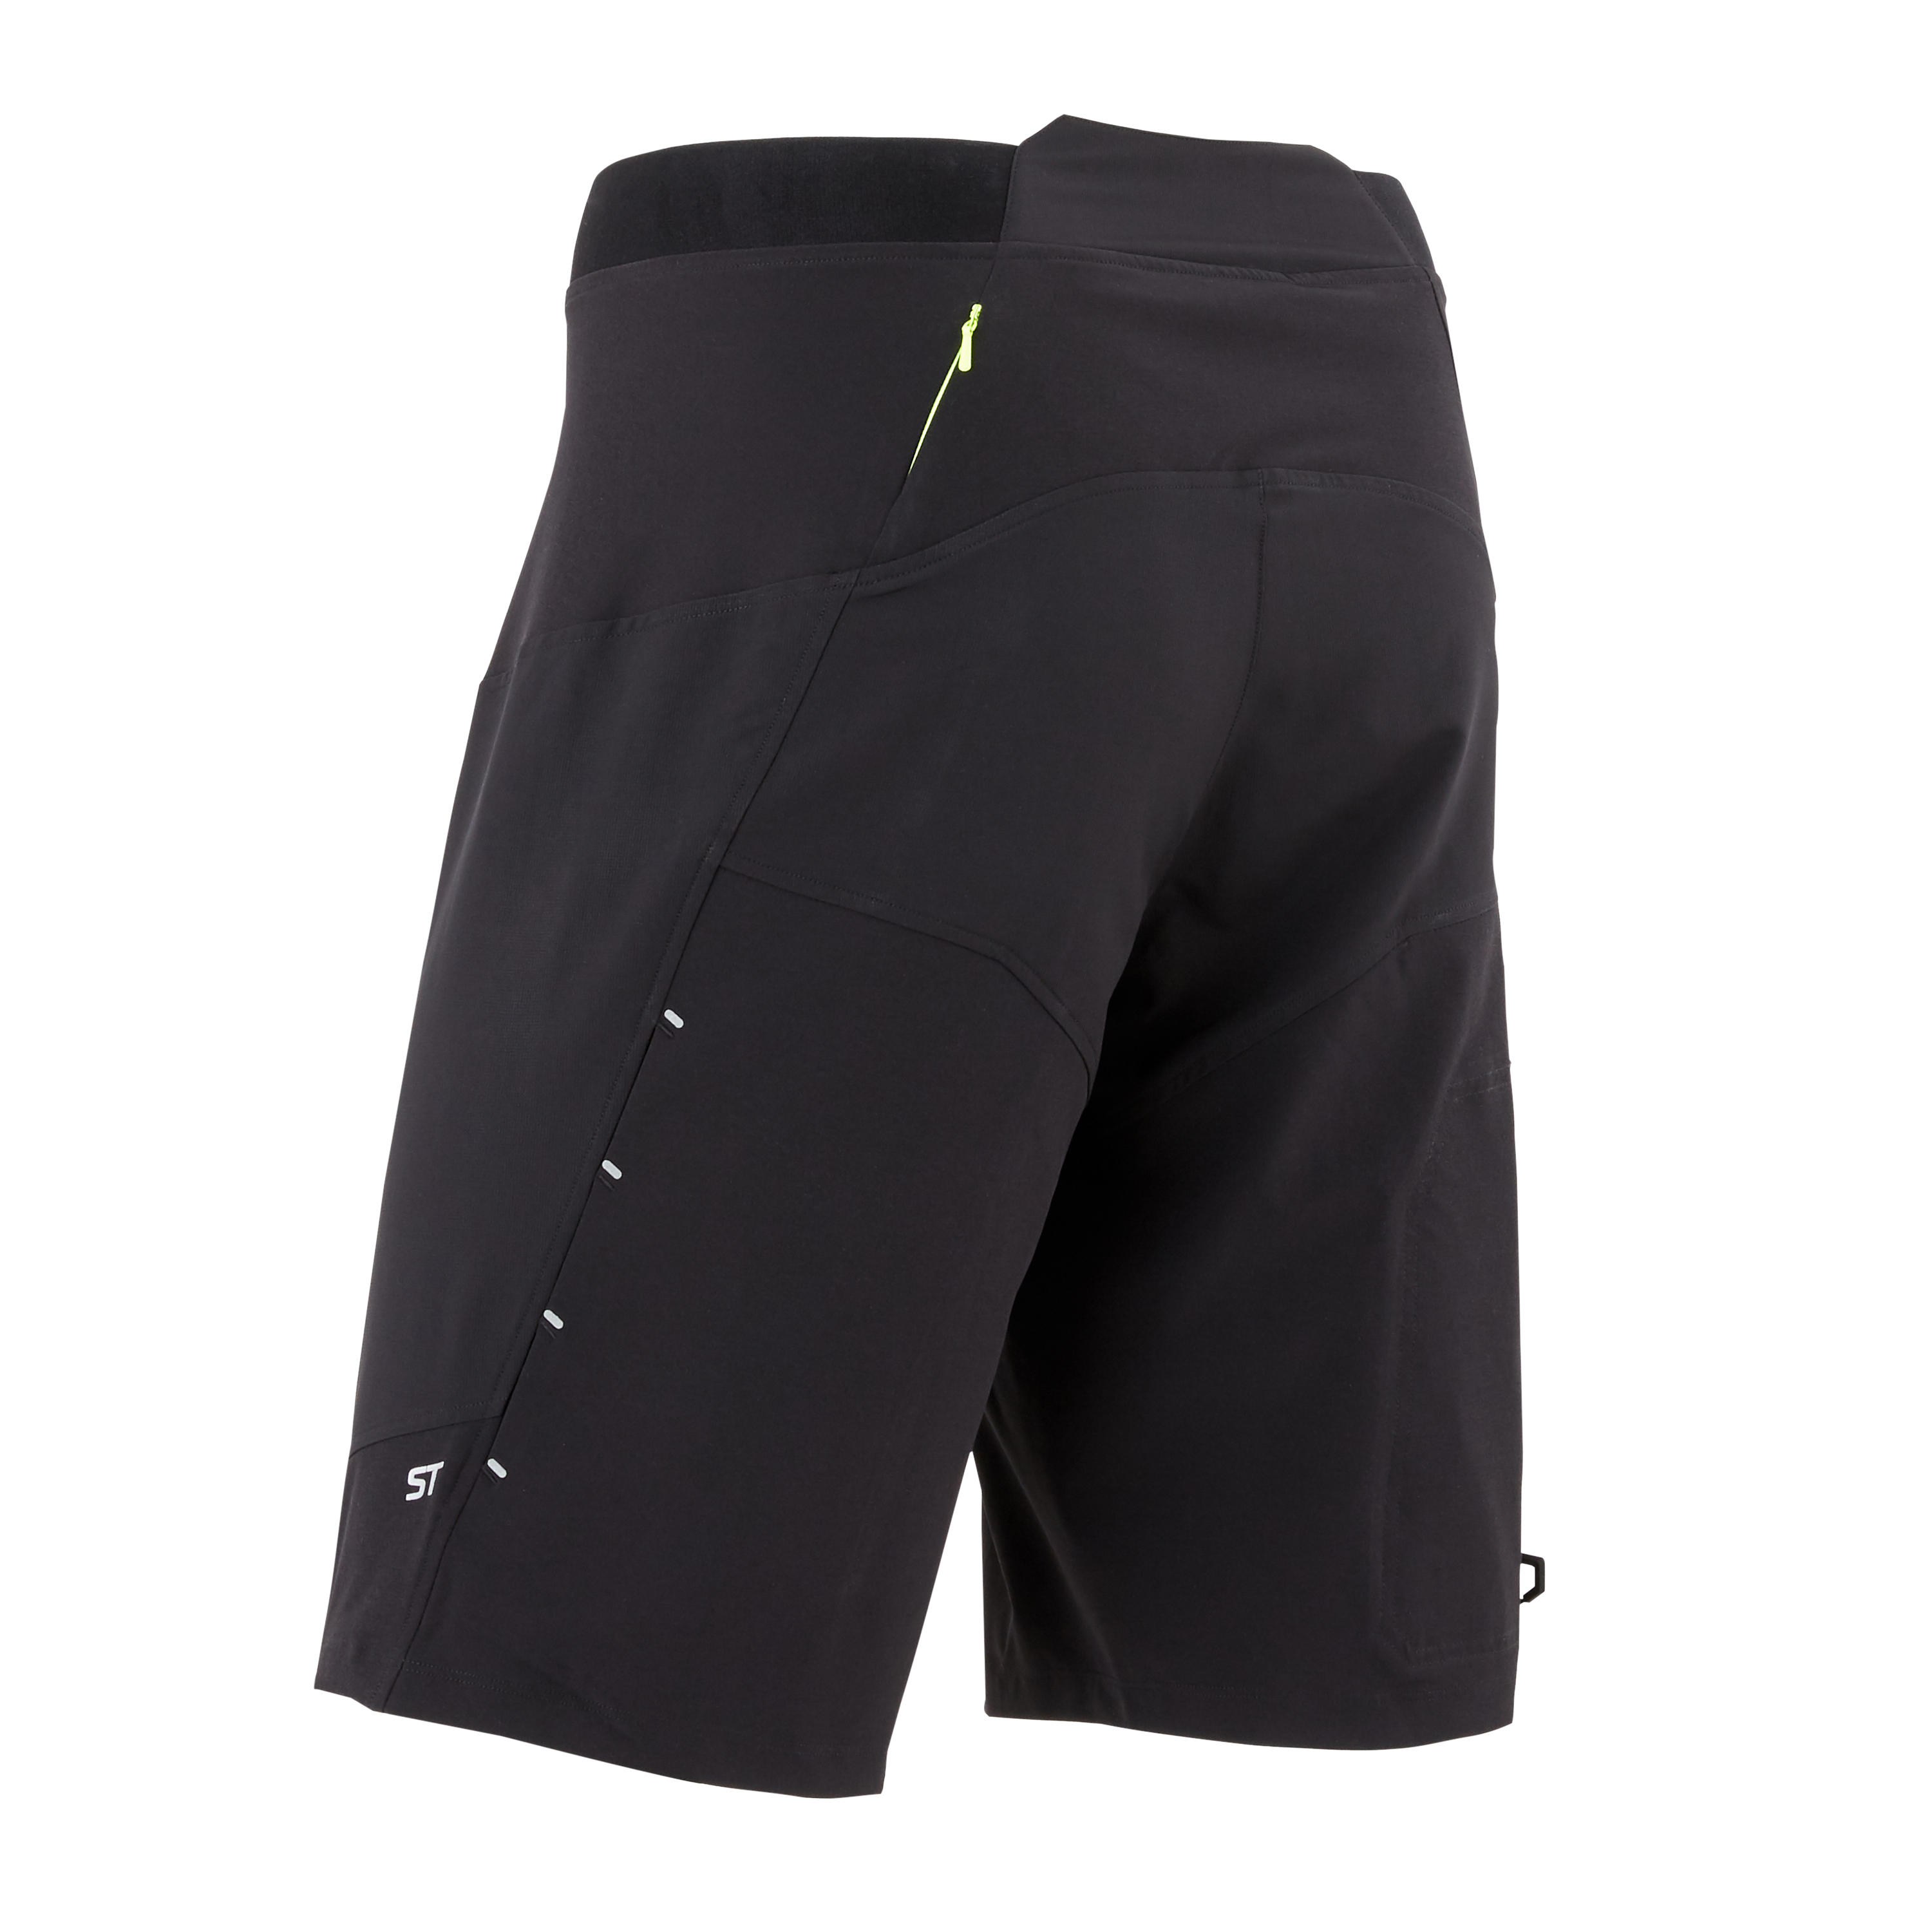 decathlon mtb shorts